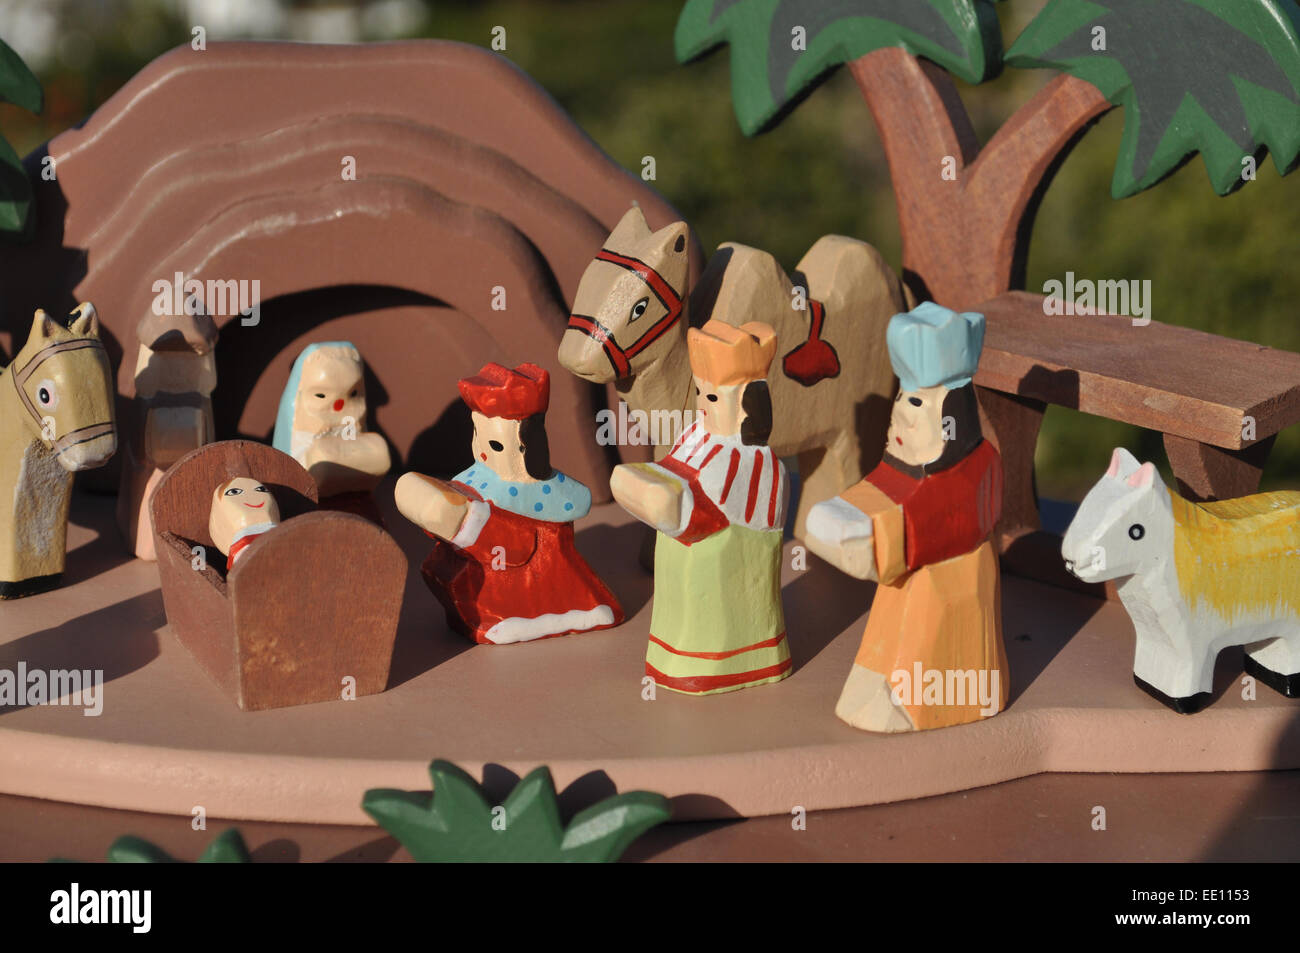 A Belen (Nativity Scene), in Spain Stock Photo